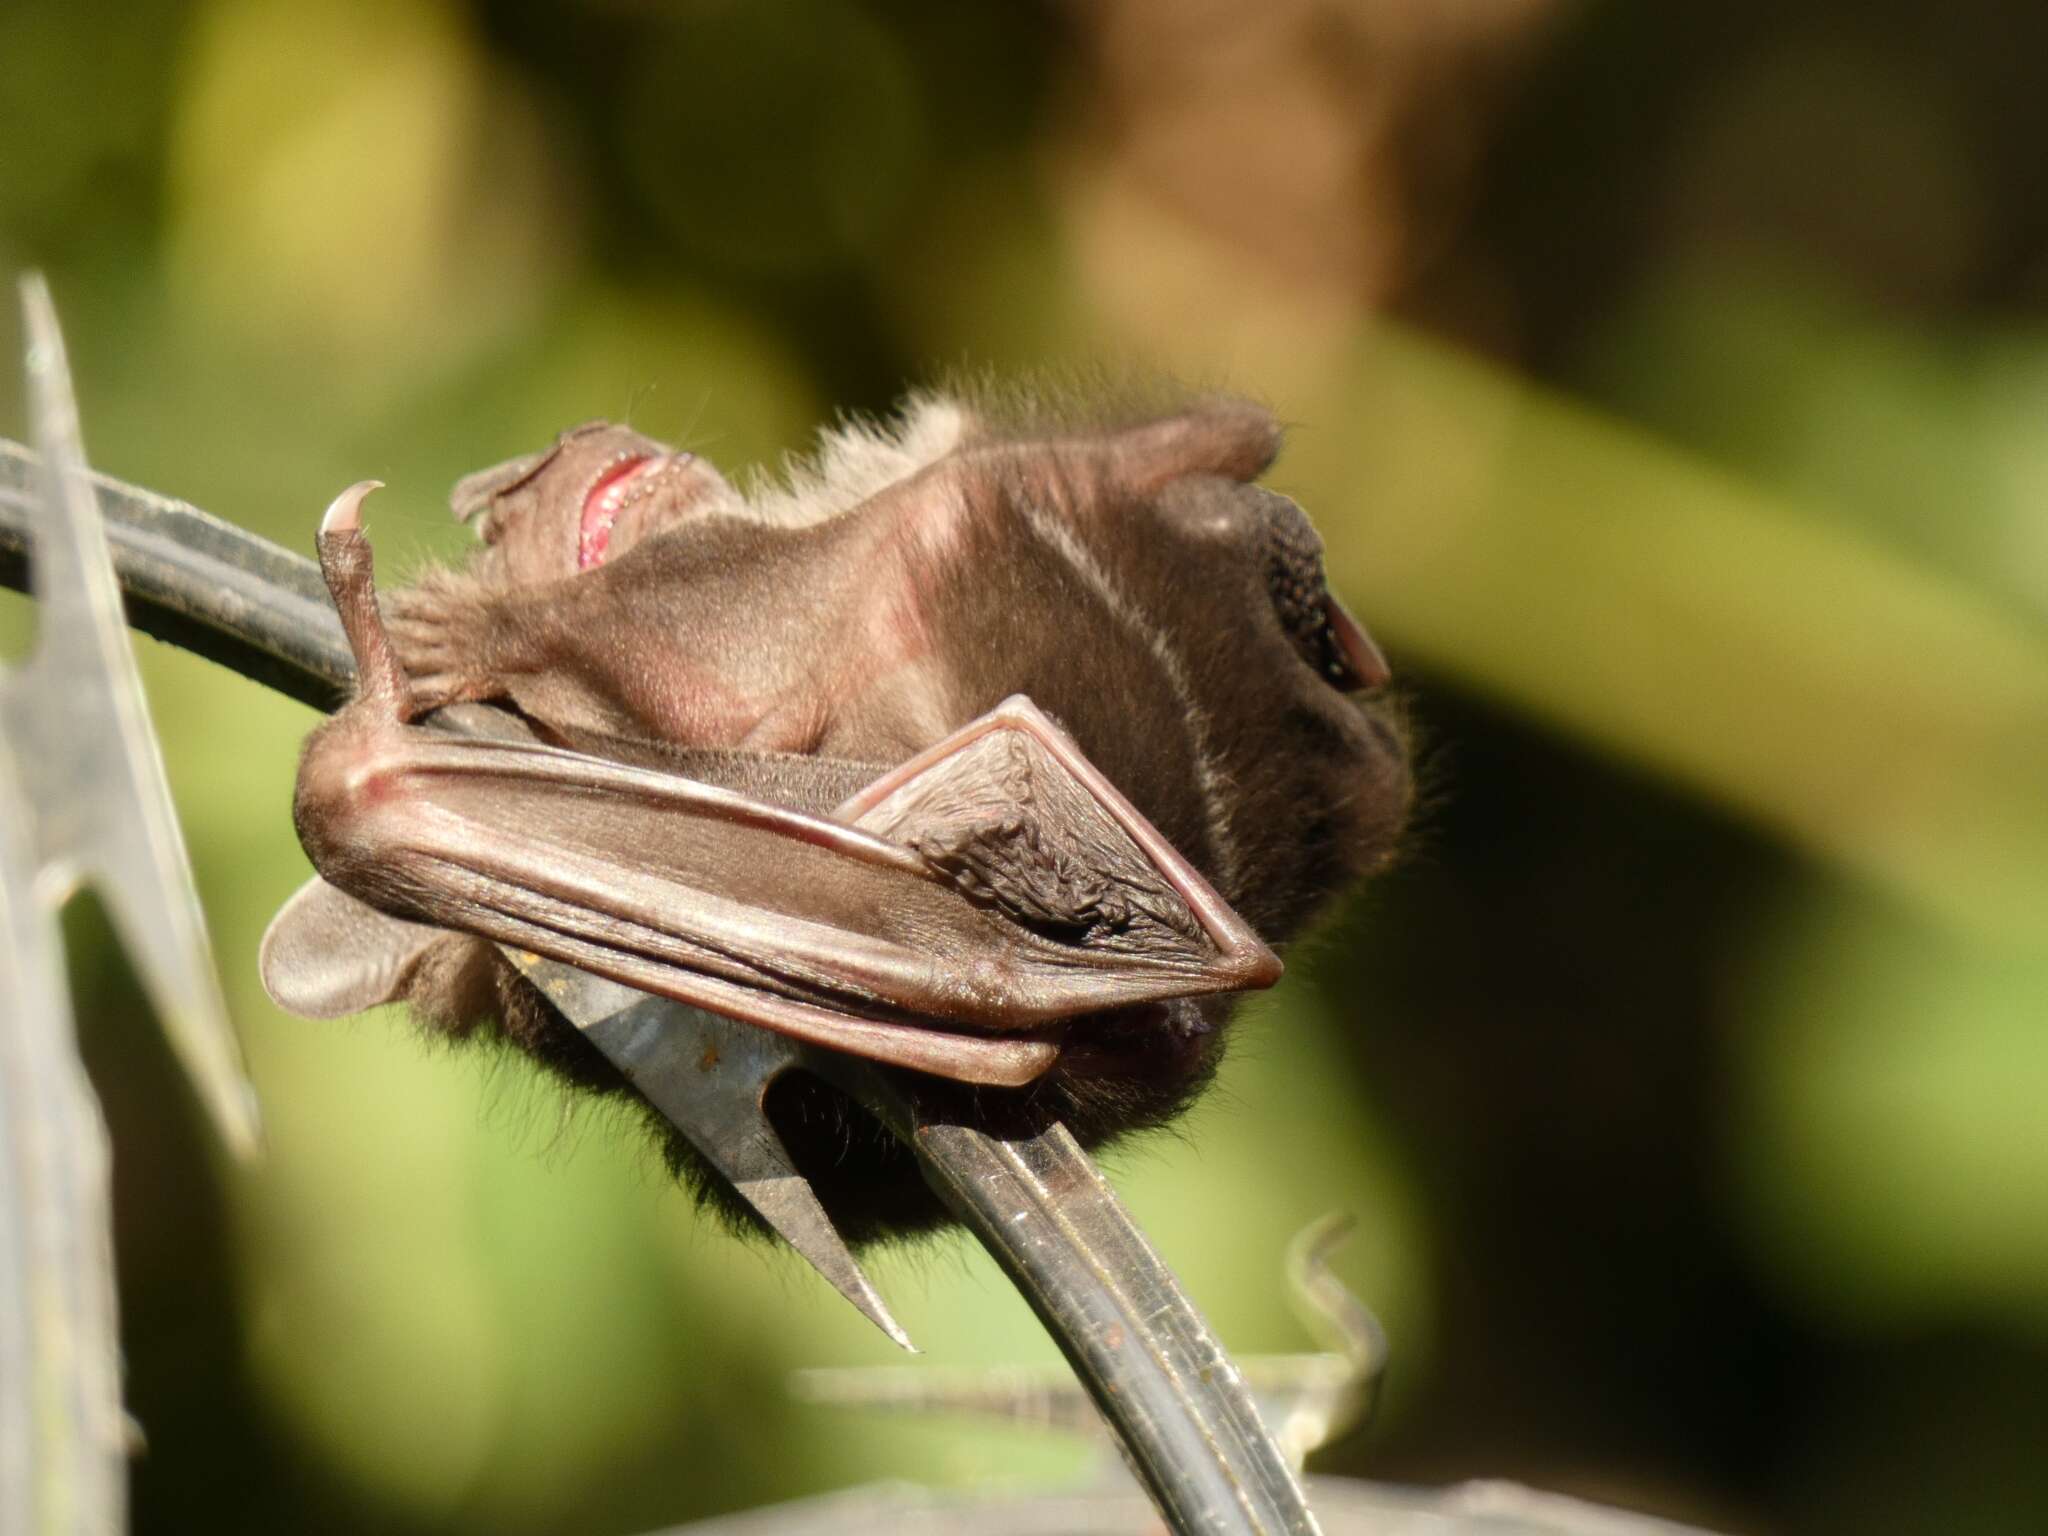 Image of Thomas's broad-nosed bat